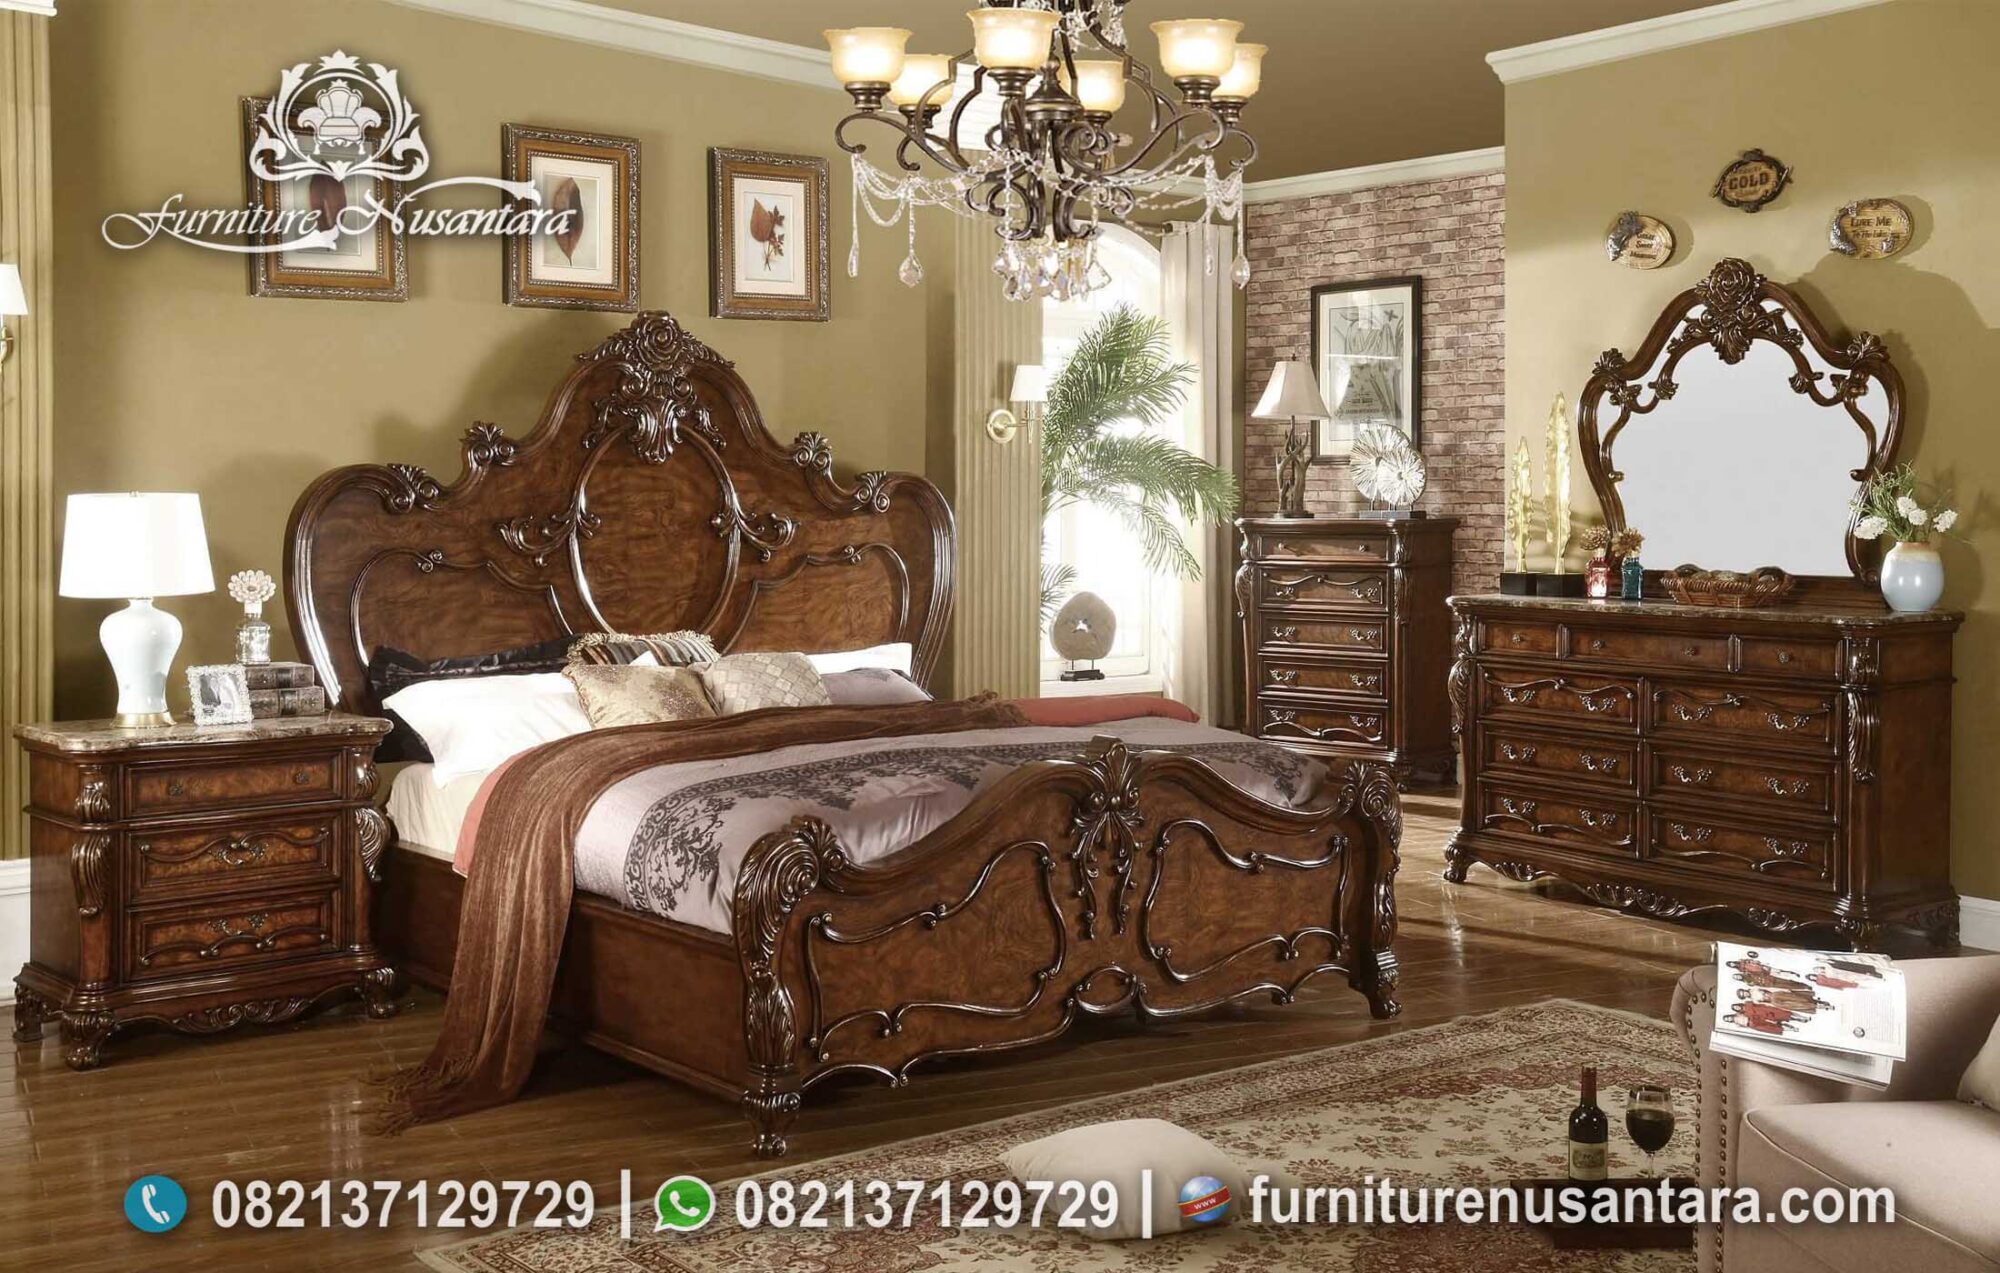 Kamar Tidur Klasik Kayu Jati Ukir Jepara KS-157, Furniture Nusantara